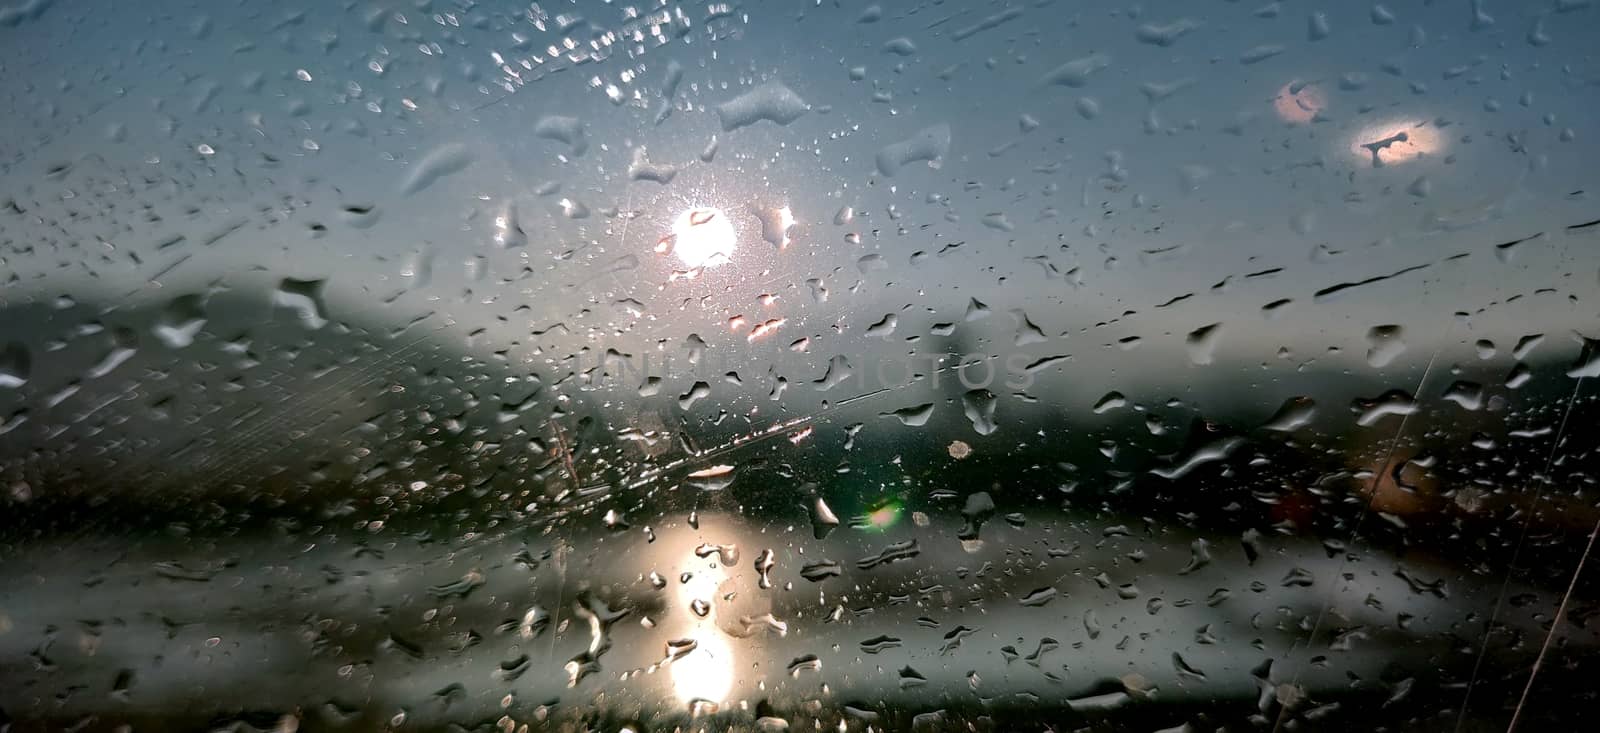 Raindrops on glass against rising sun by mshivangi92